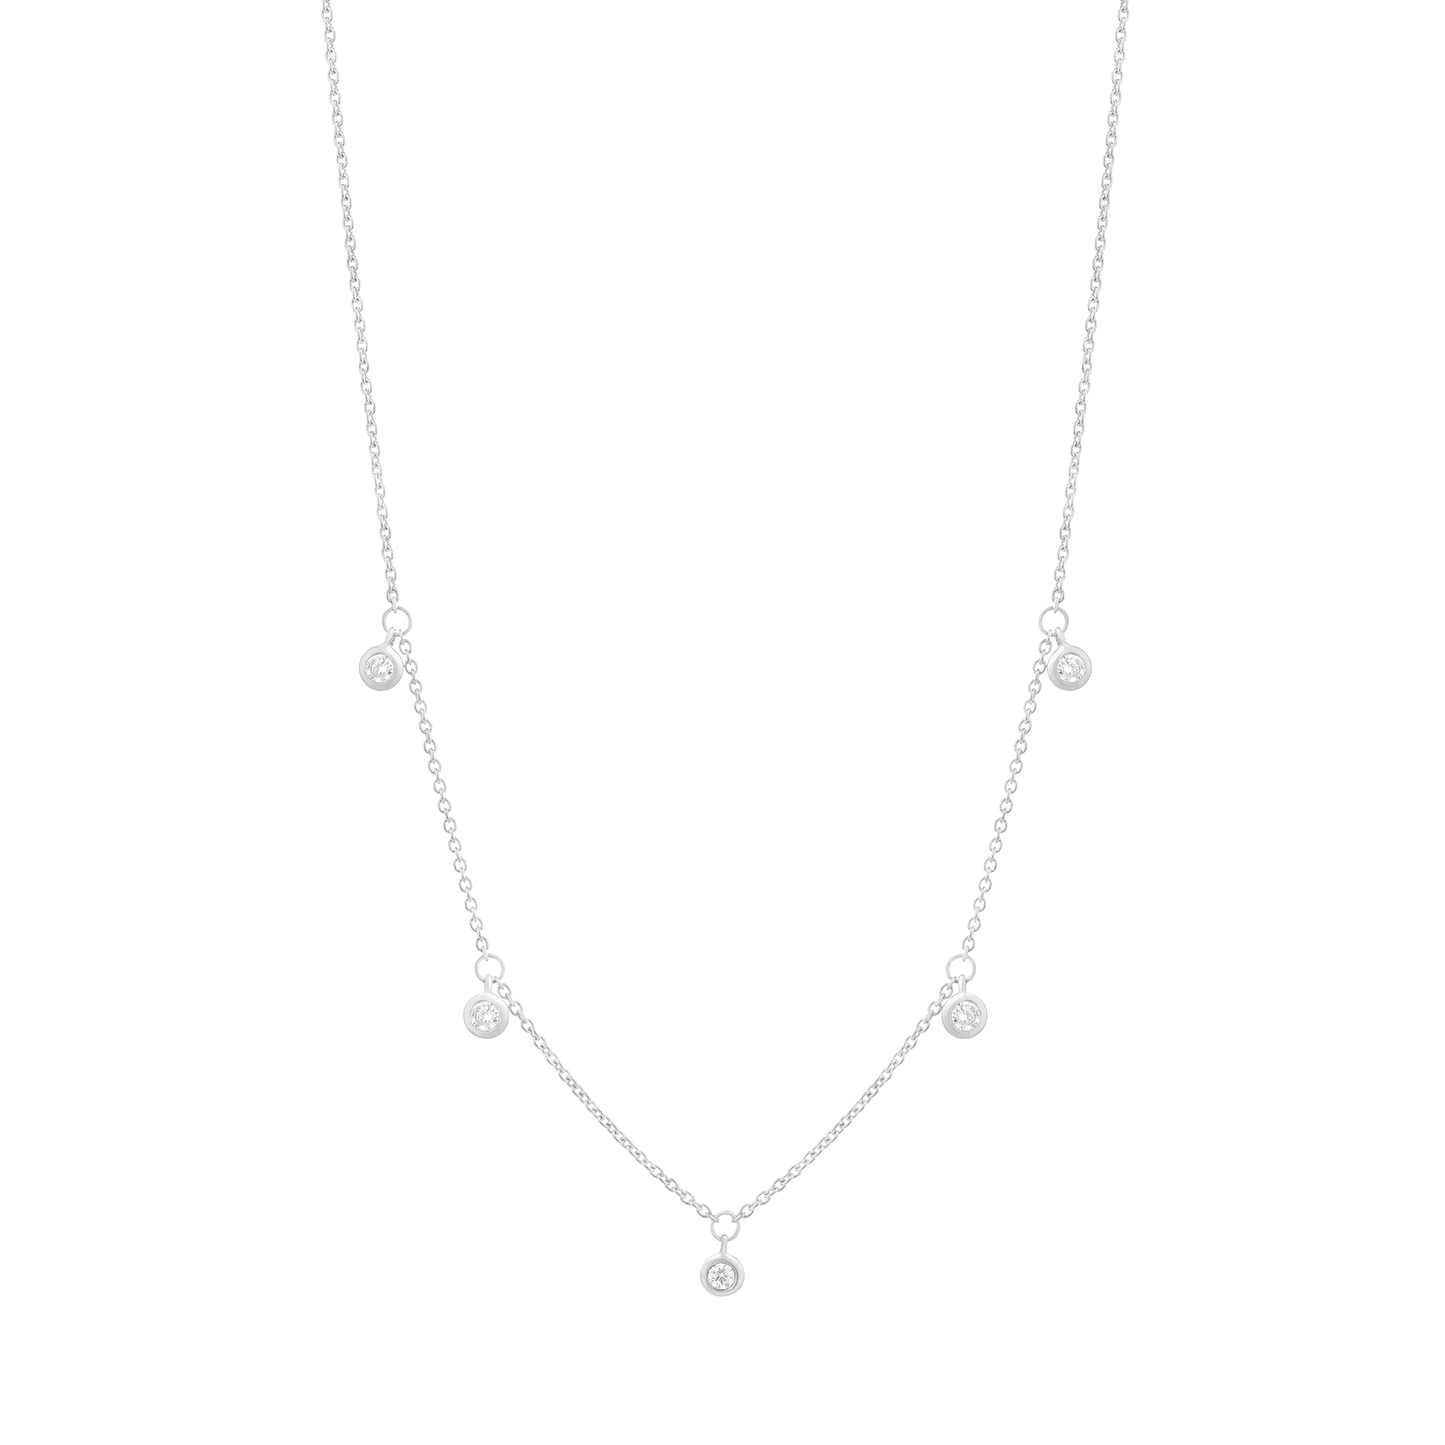 5 Diamonds Bezel Necklace - 14K Rose Gold Necklaces magal-dev 